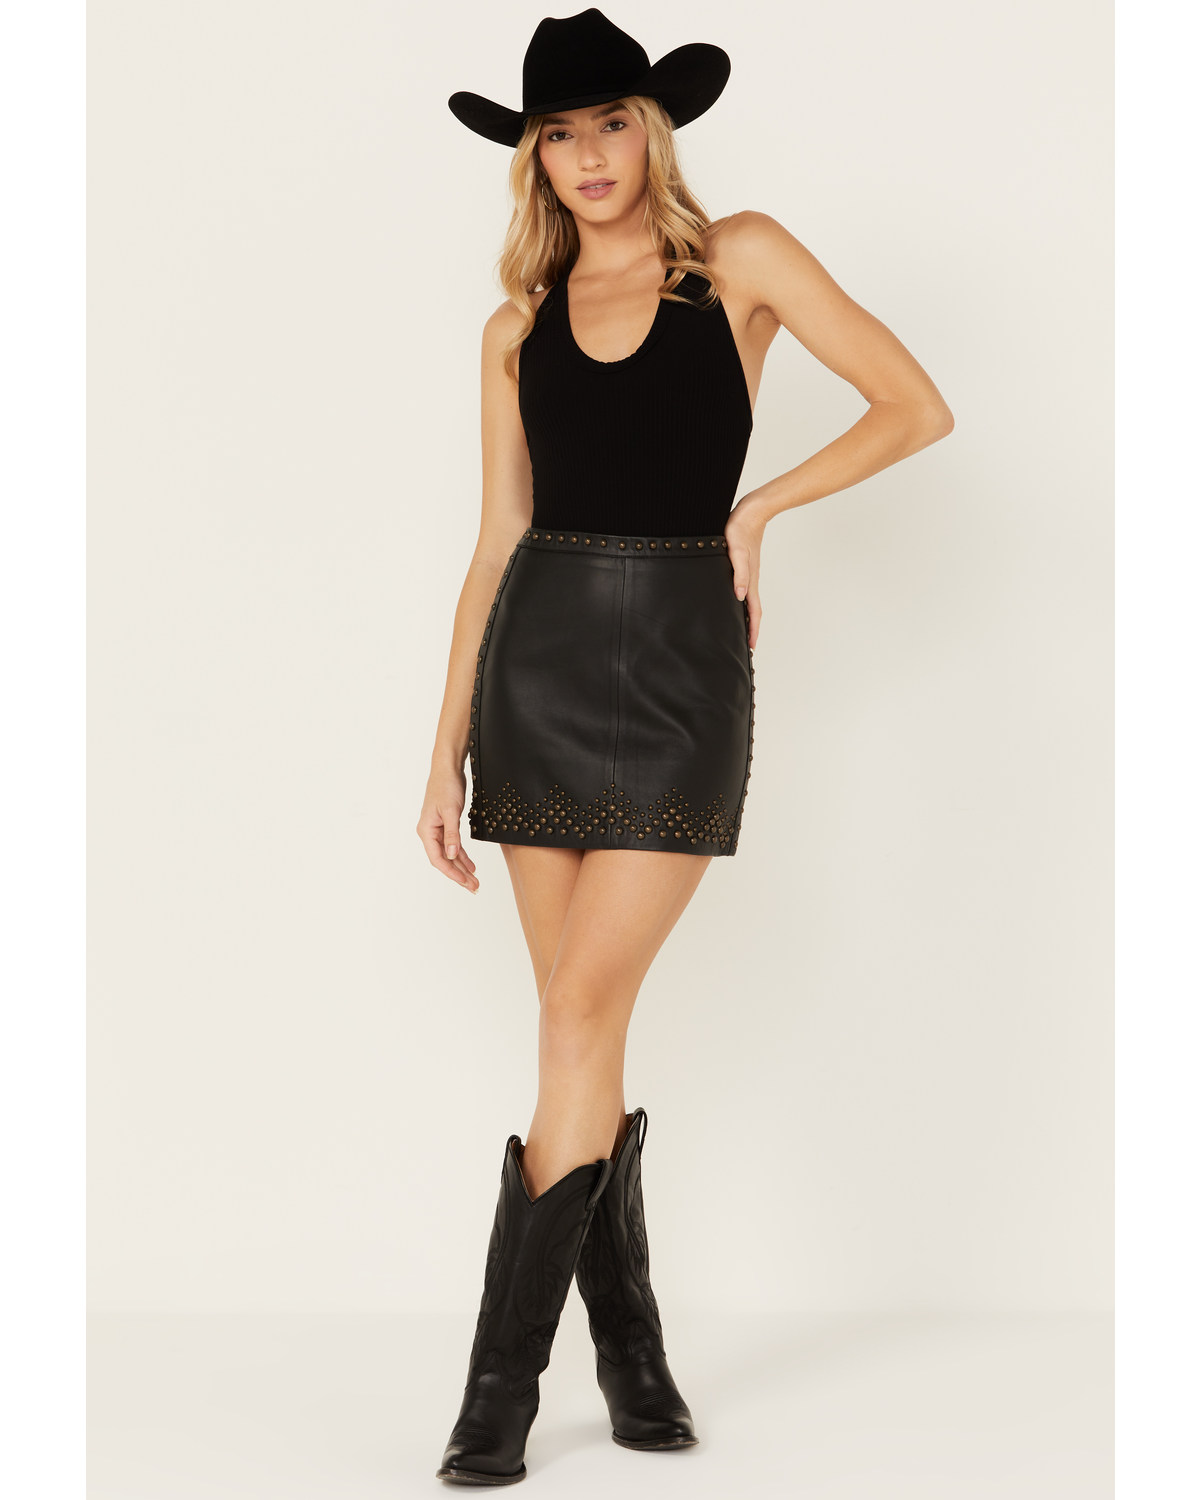 Wonderwest Women's Studded Leather Skirt